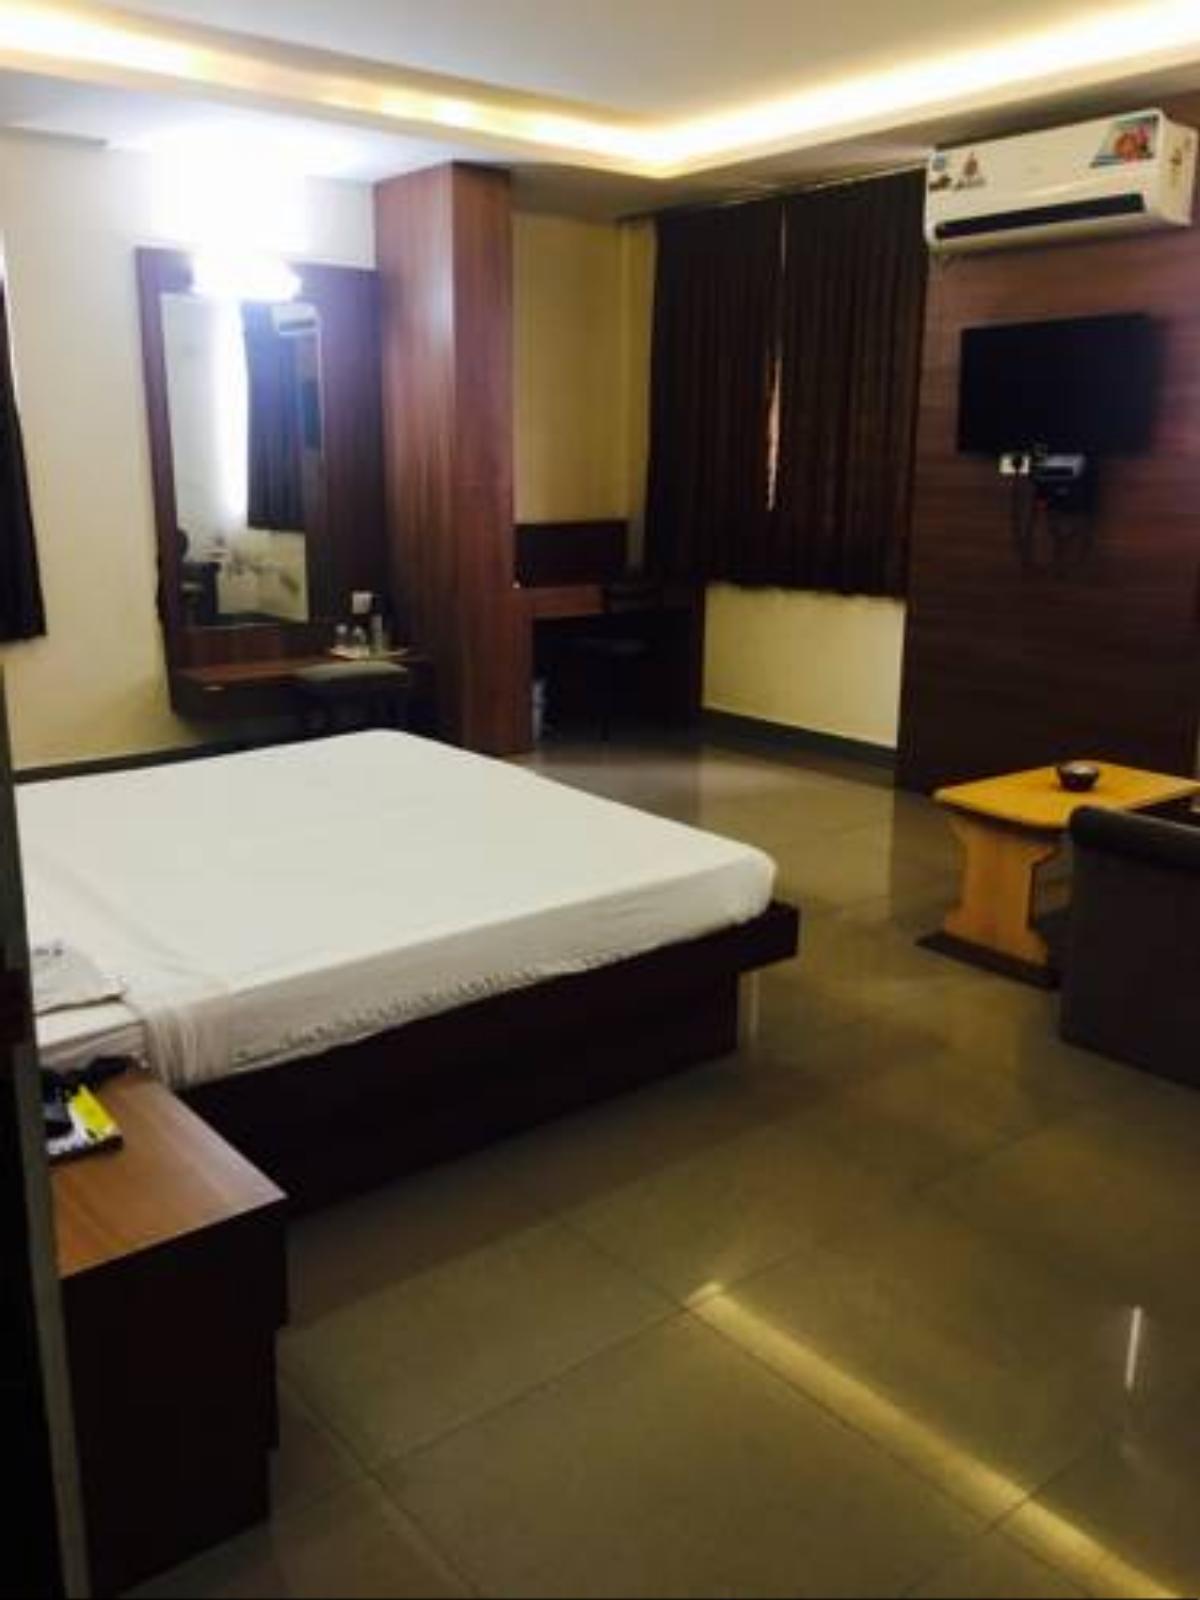 Abhiman Residency Hotel Mangalore India